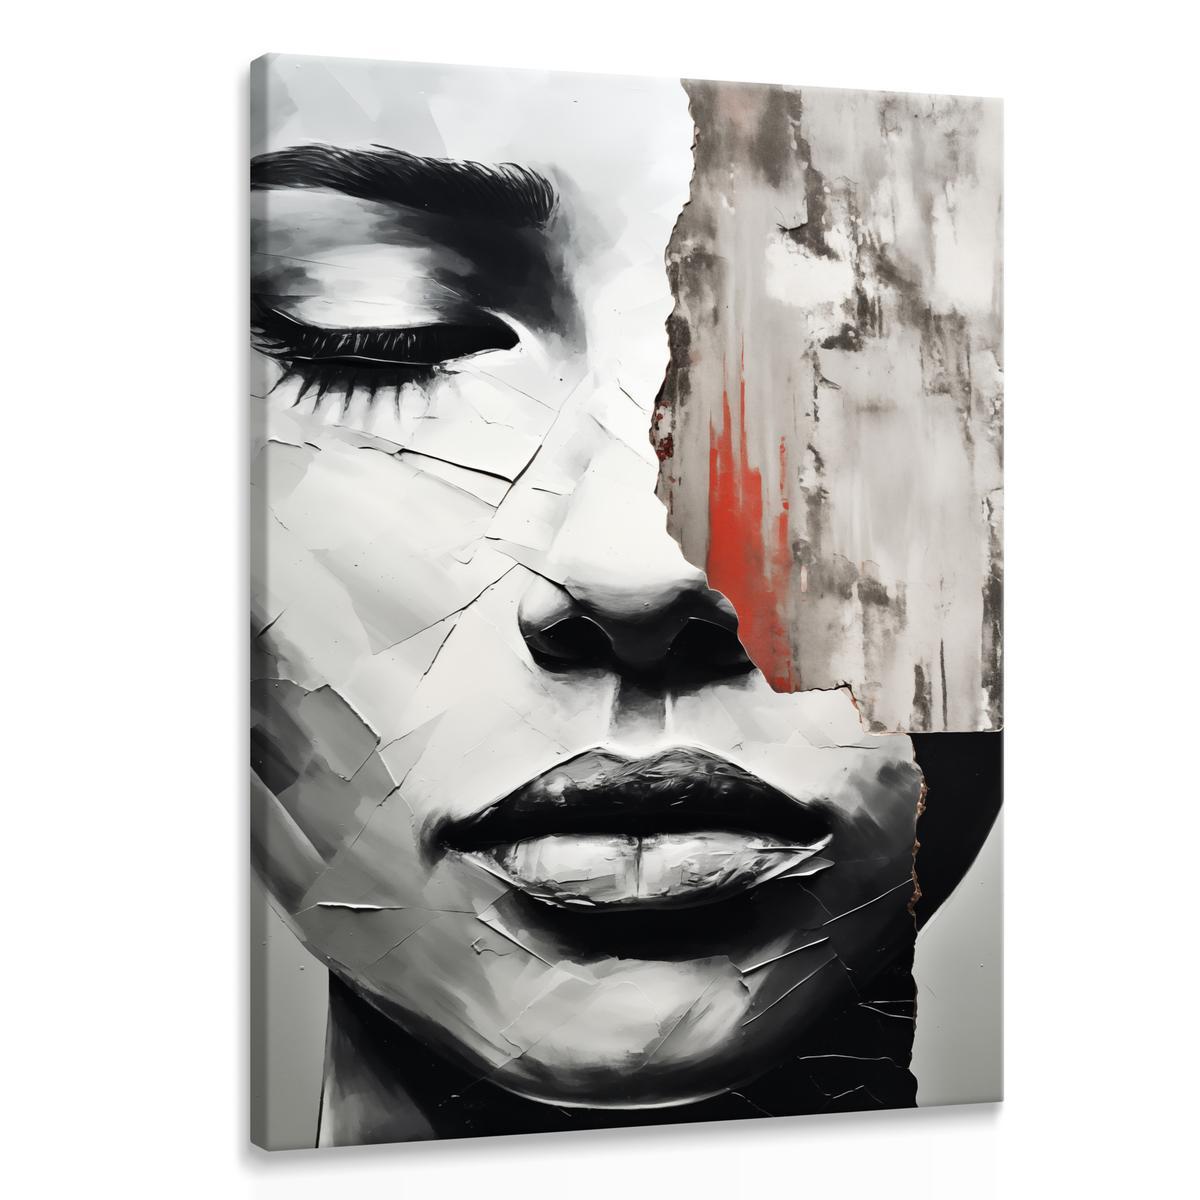 Obraz Do Sypialni Abstrakcyjny PORTRET Kobiety Usta Beton Mur 80x120cm 0 Full Screen